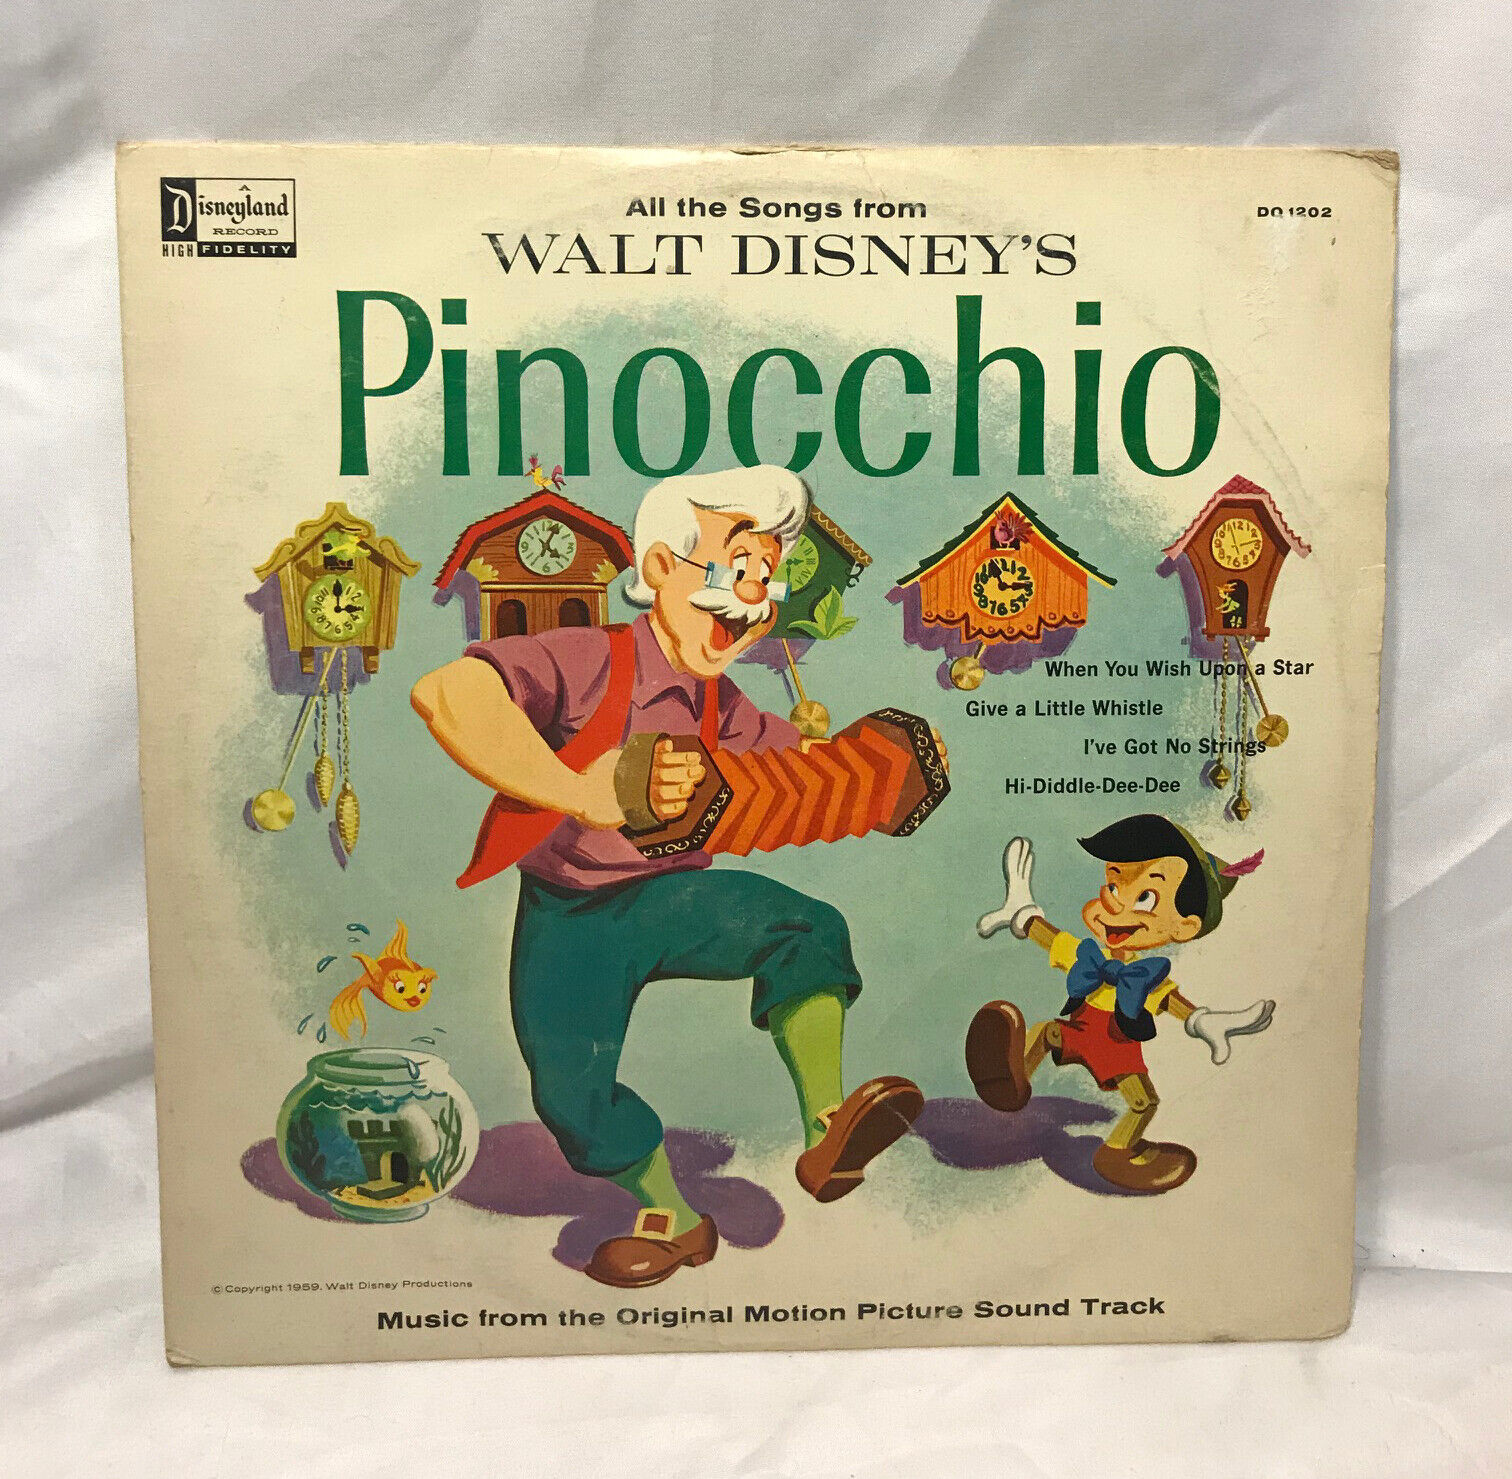 1959 Walt Disney Pinocchio Vinyl Record Disneyland Record DQ-1202 Its a Classic